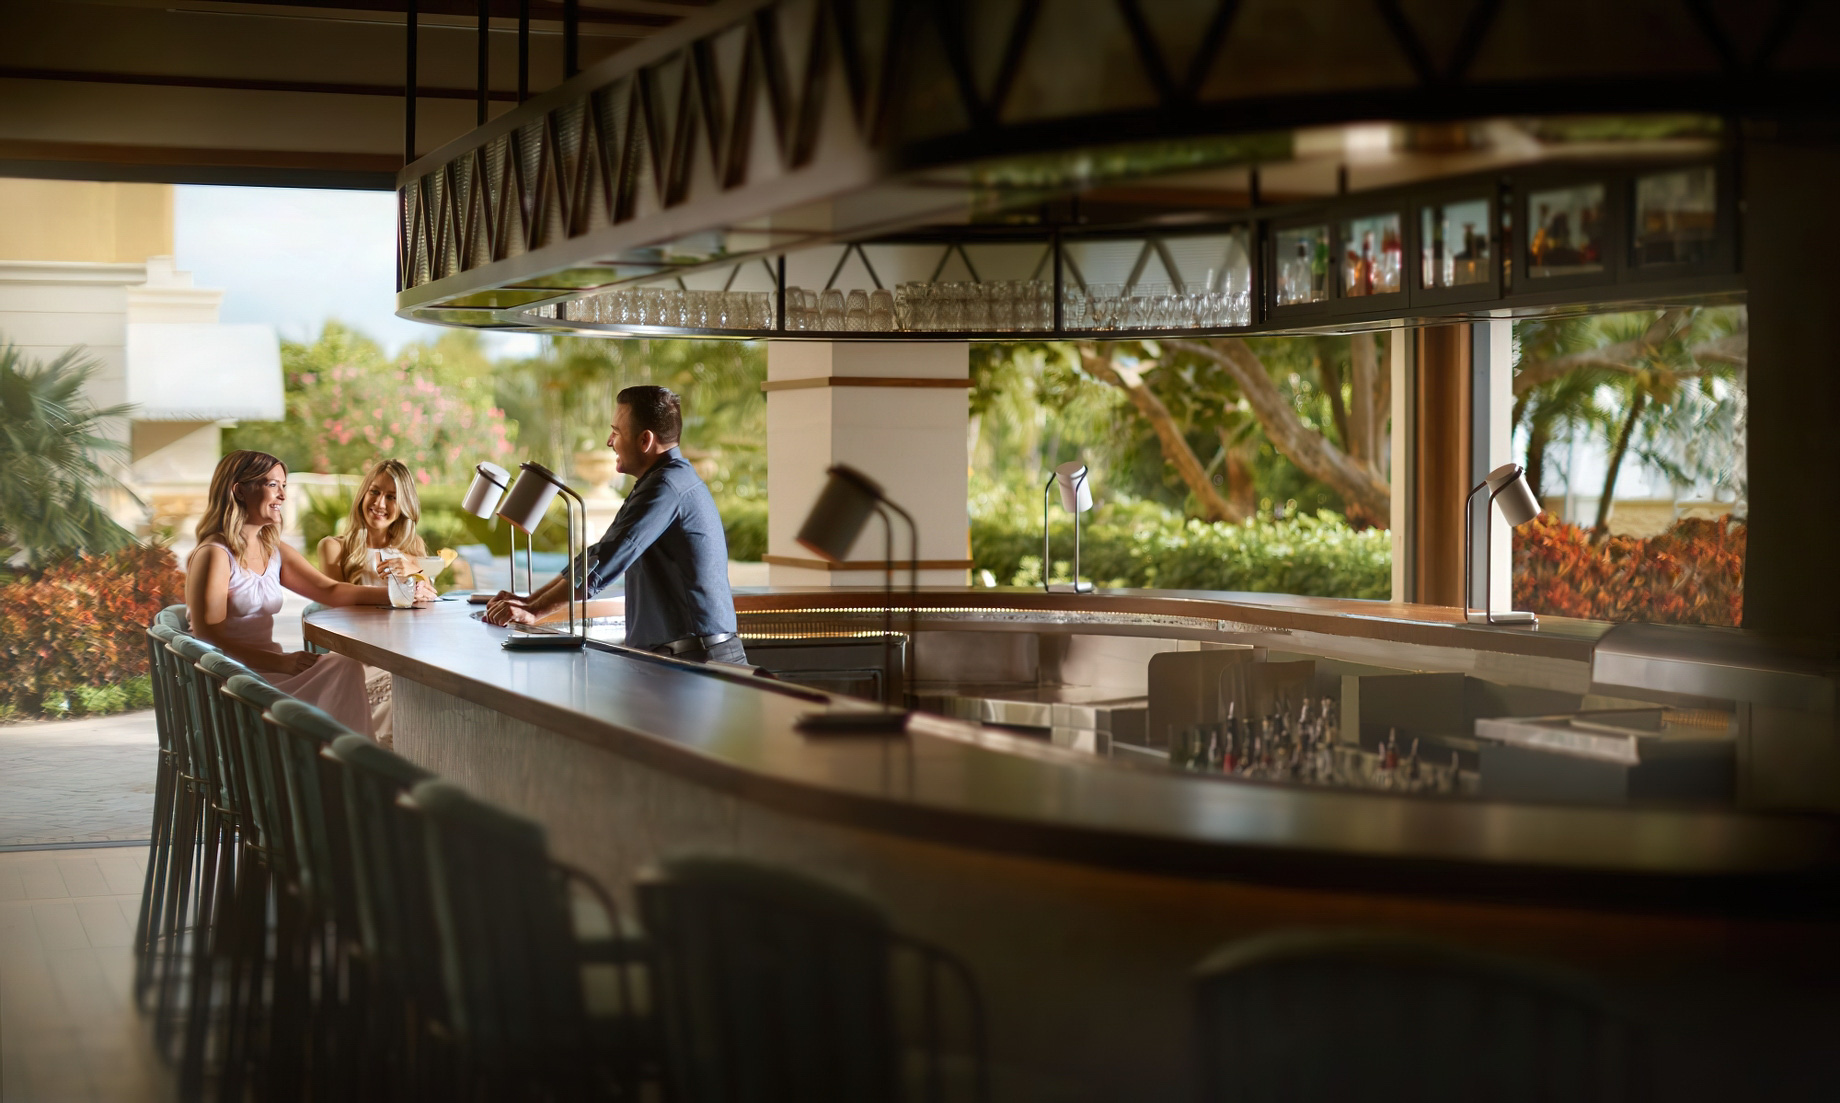 The Ritz-Carlton Key Biscayne, Miami Hotel – Miami, FL, USA – Lightkeepers Restaurant Bar